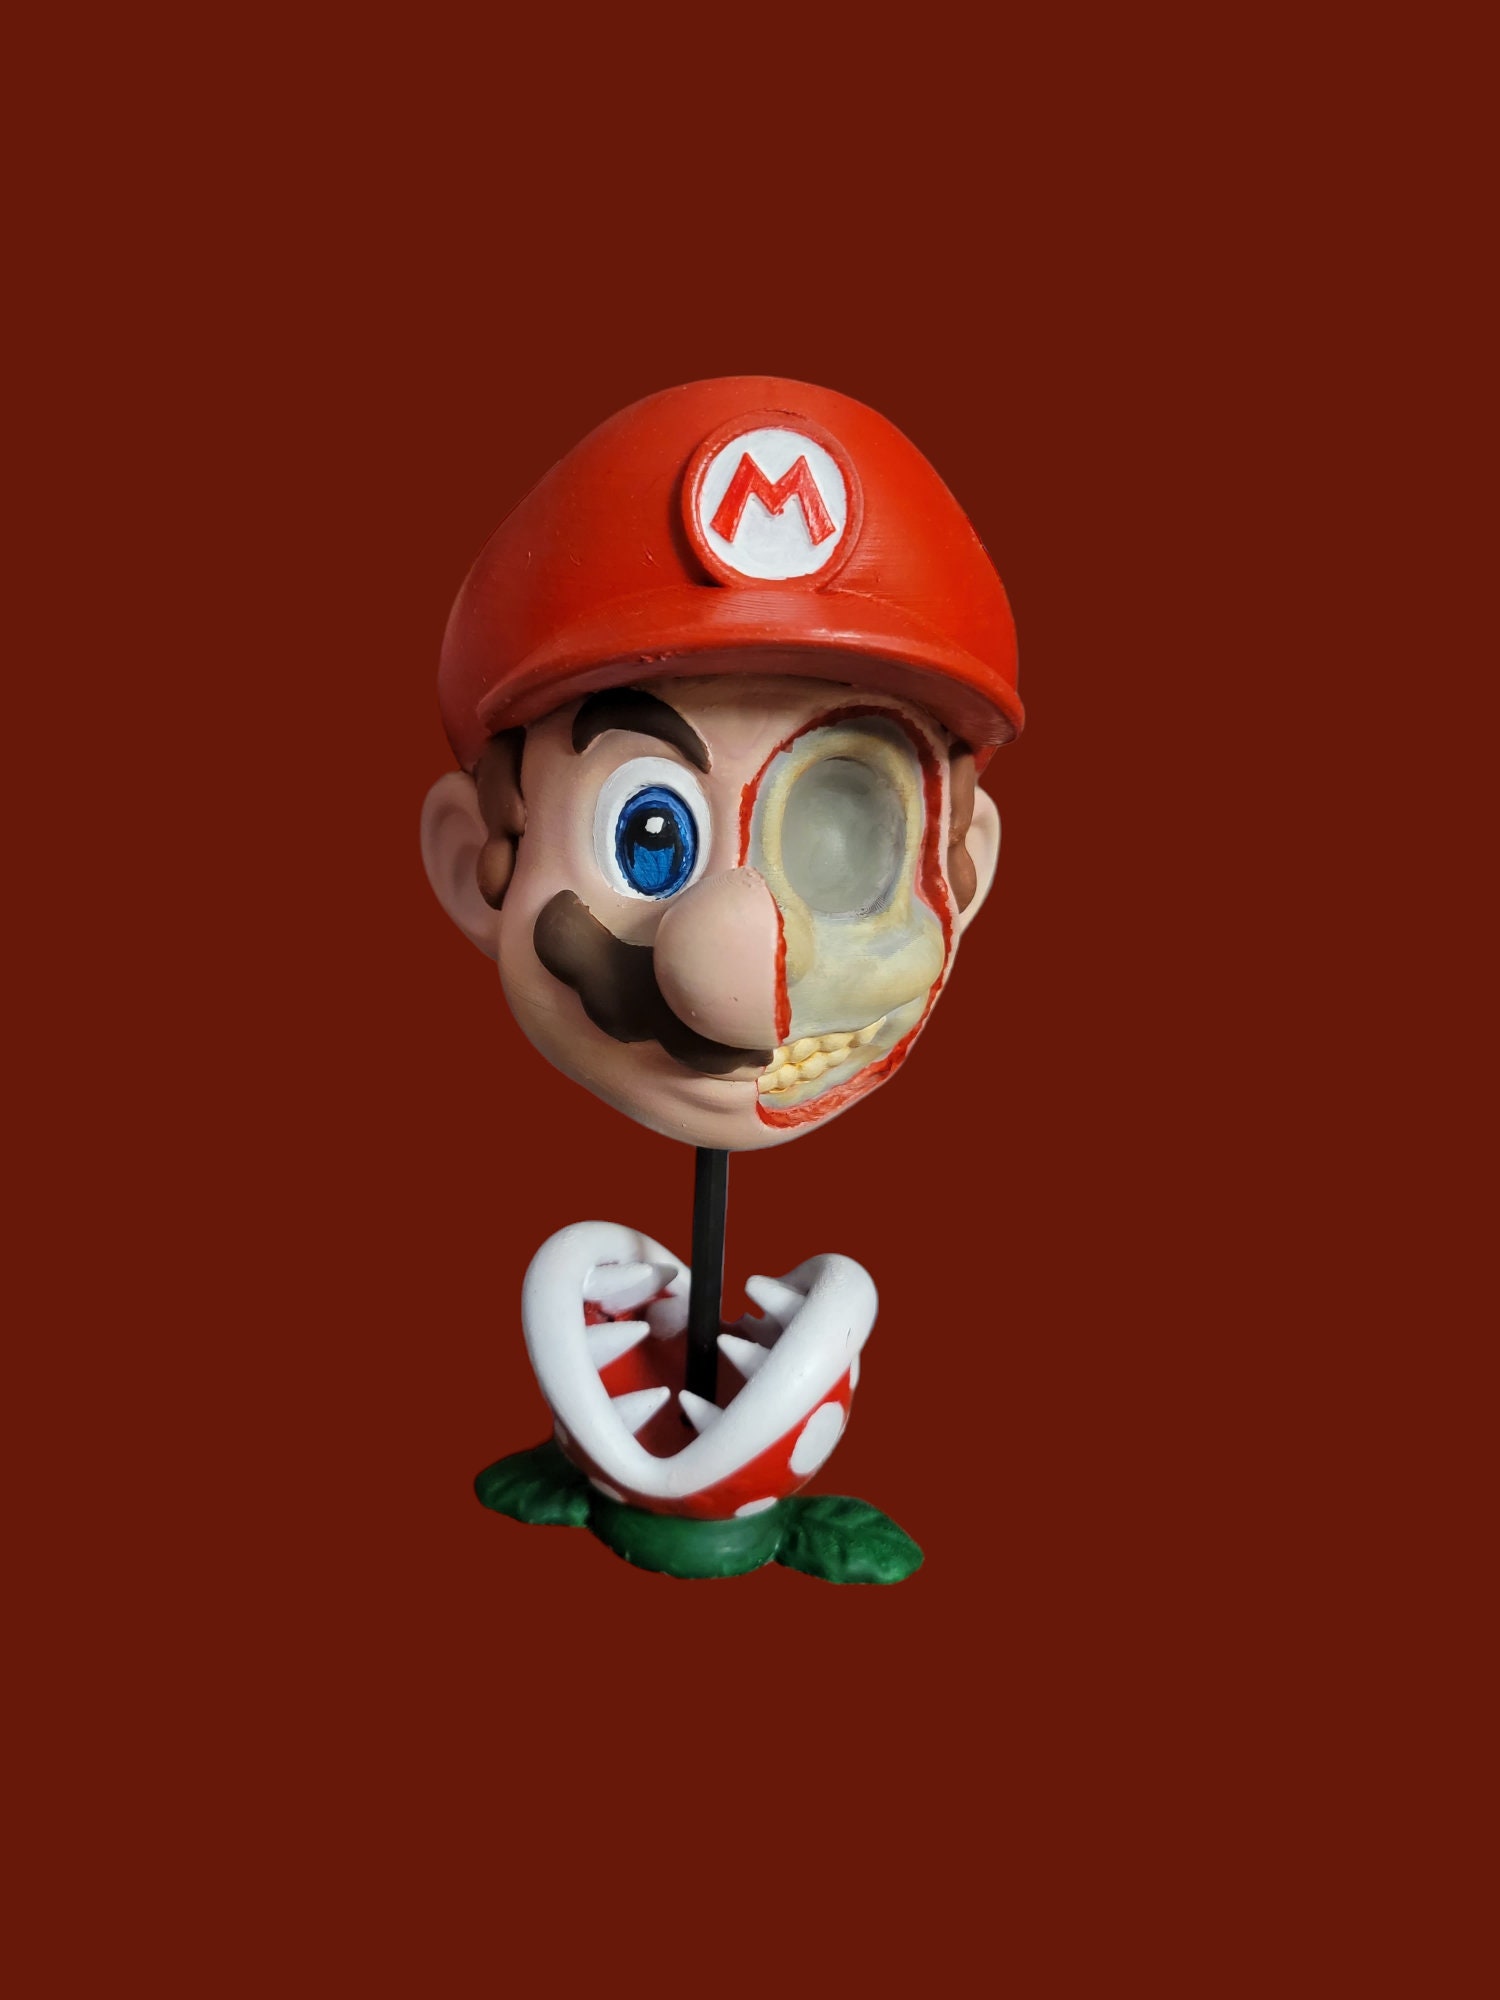 Yoshi - Super Mario Bros - Fan Art - 3D model by printedobsession